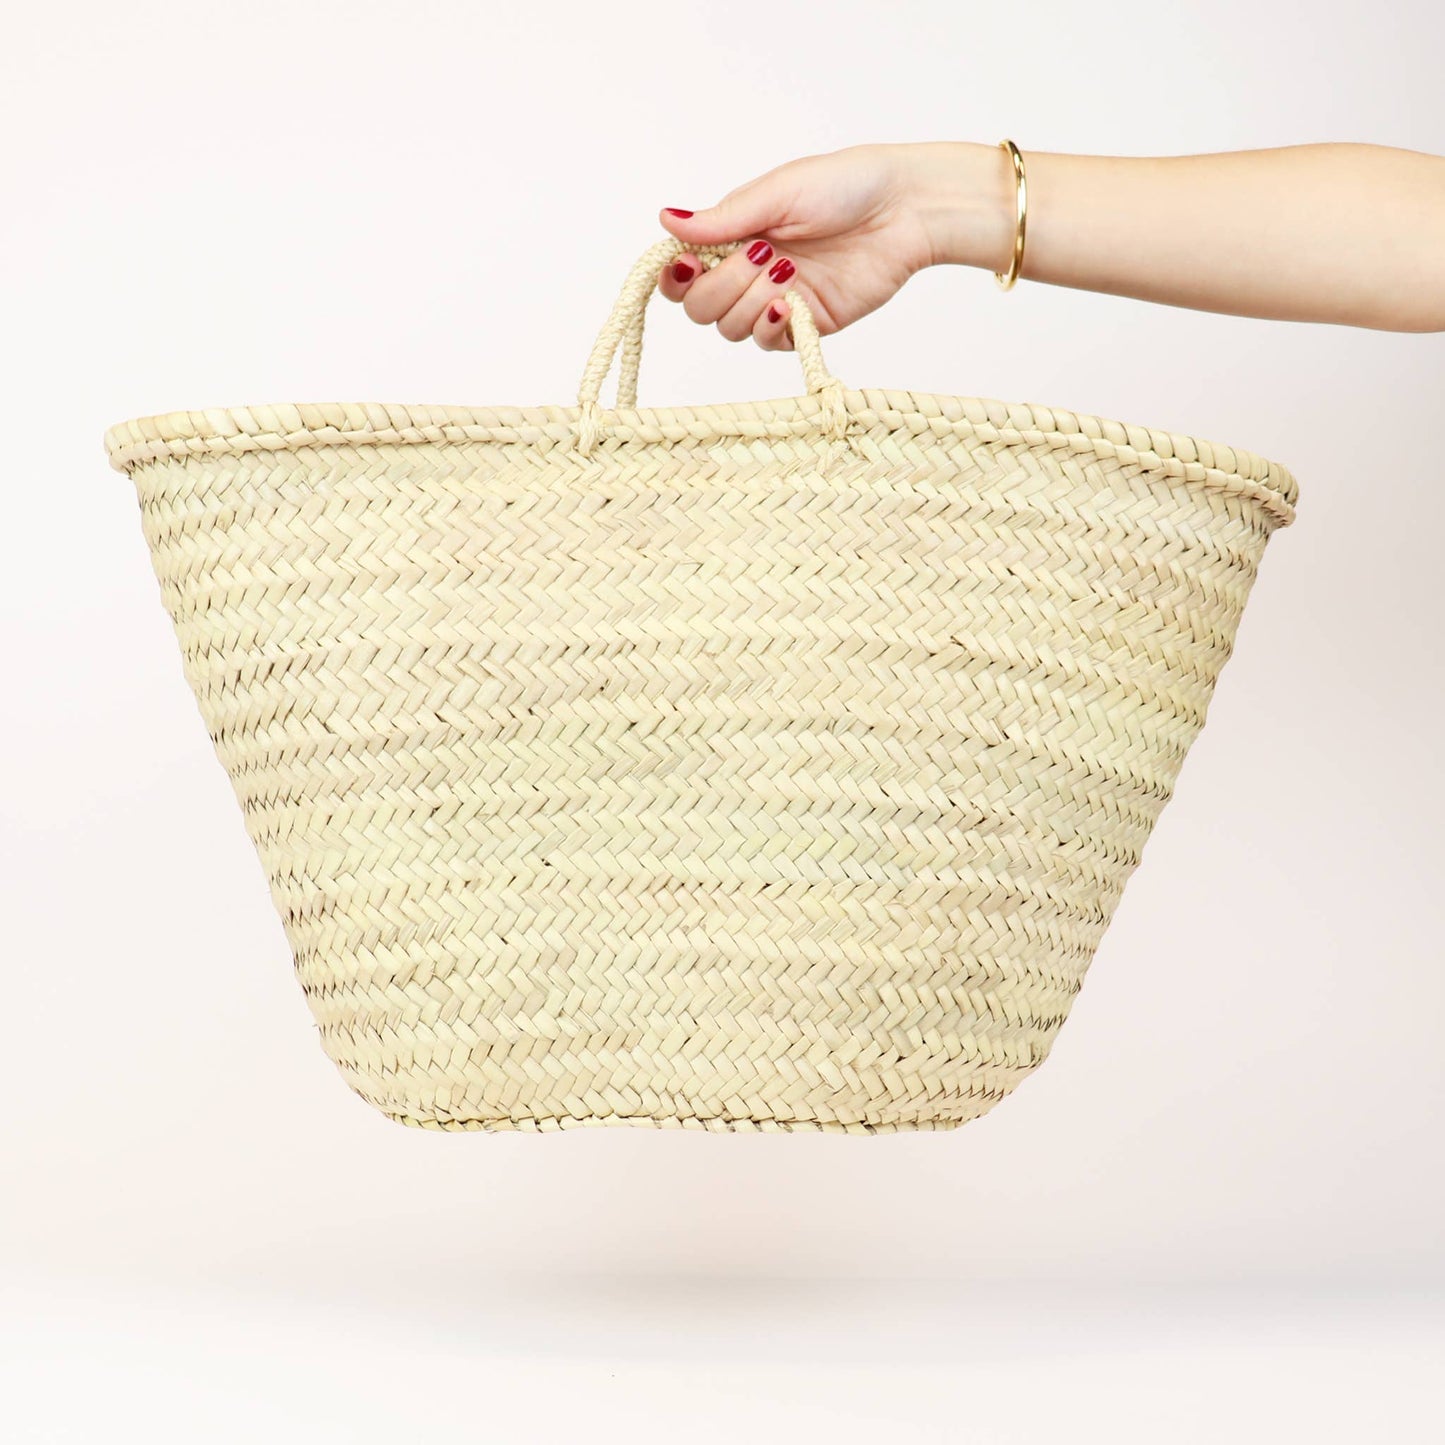 SOCCO Designs - Straw Bag - Miami French Market Basket (Medium)